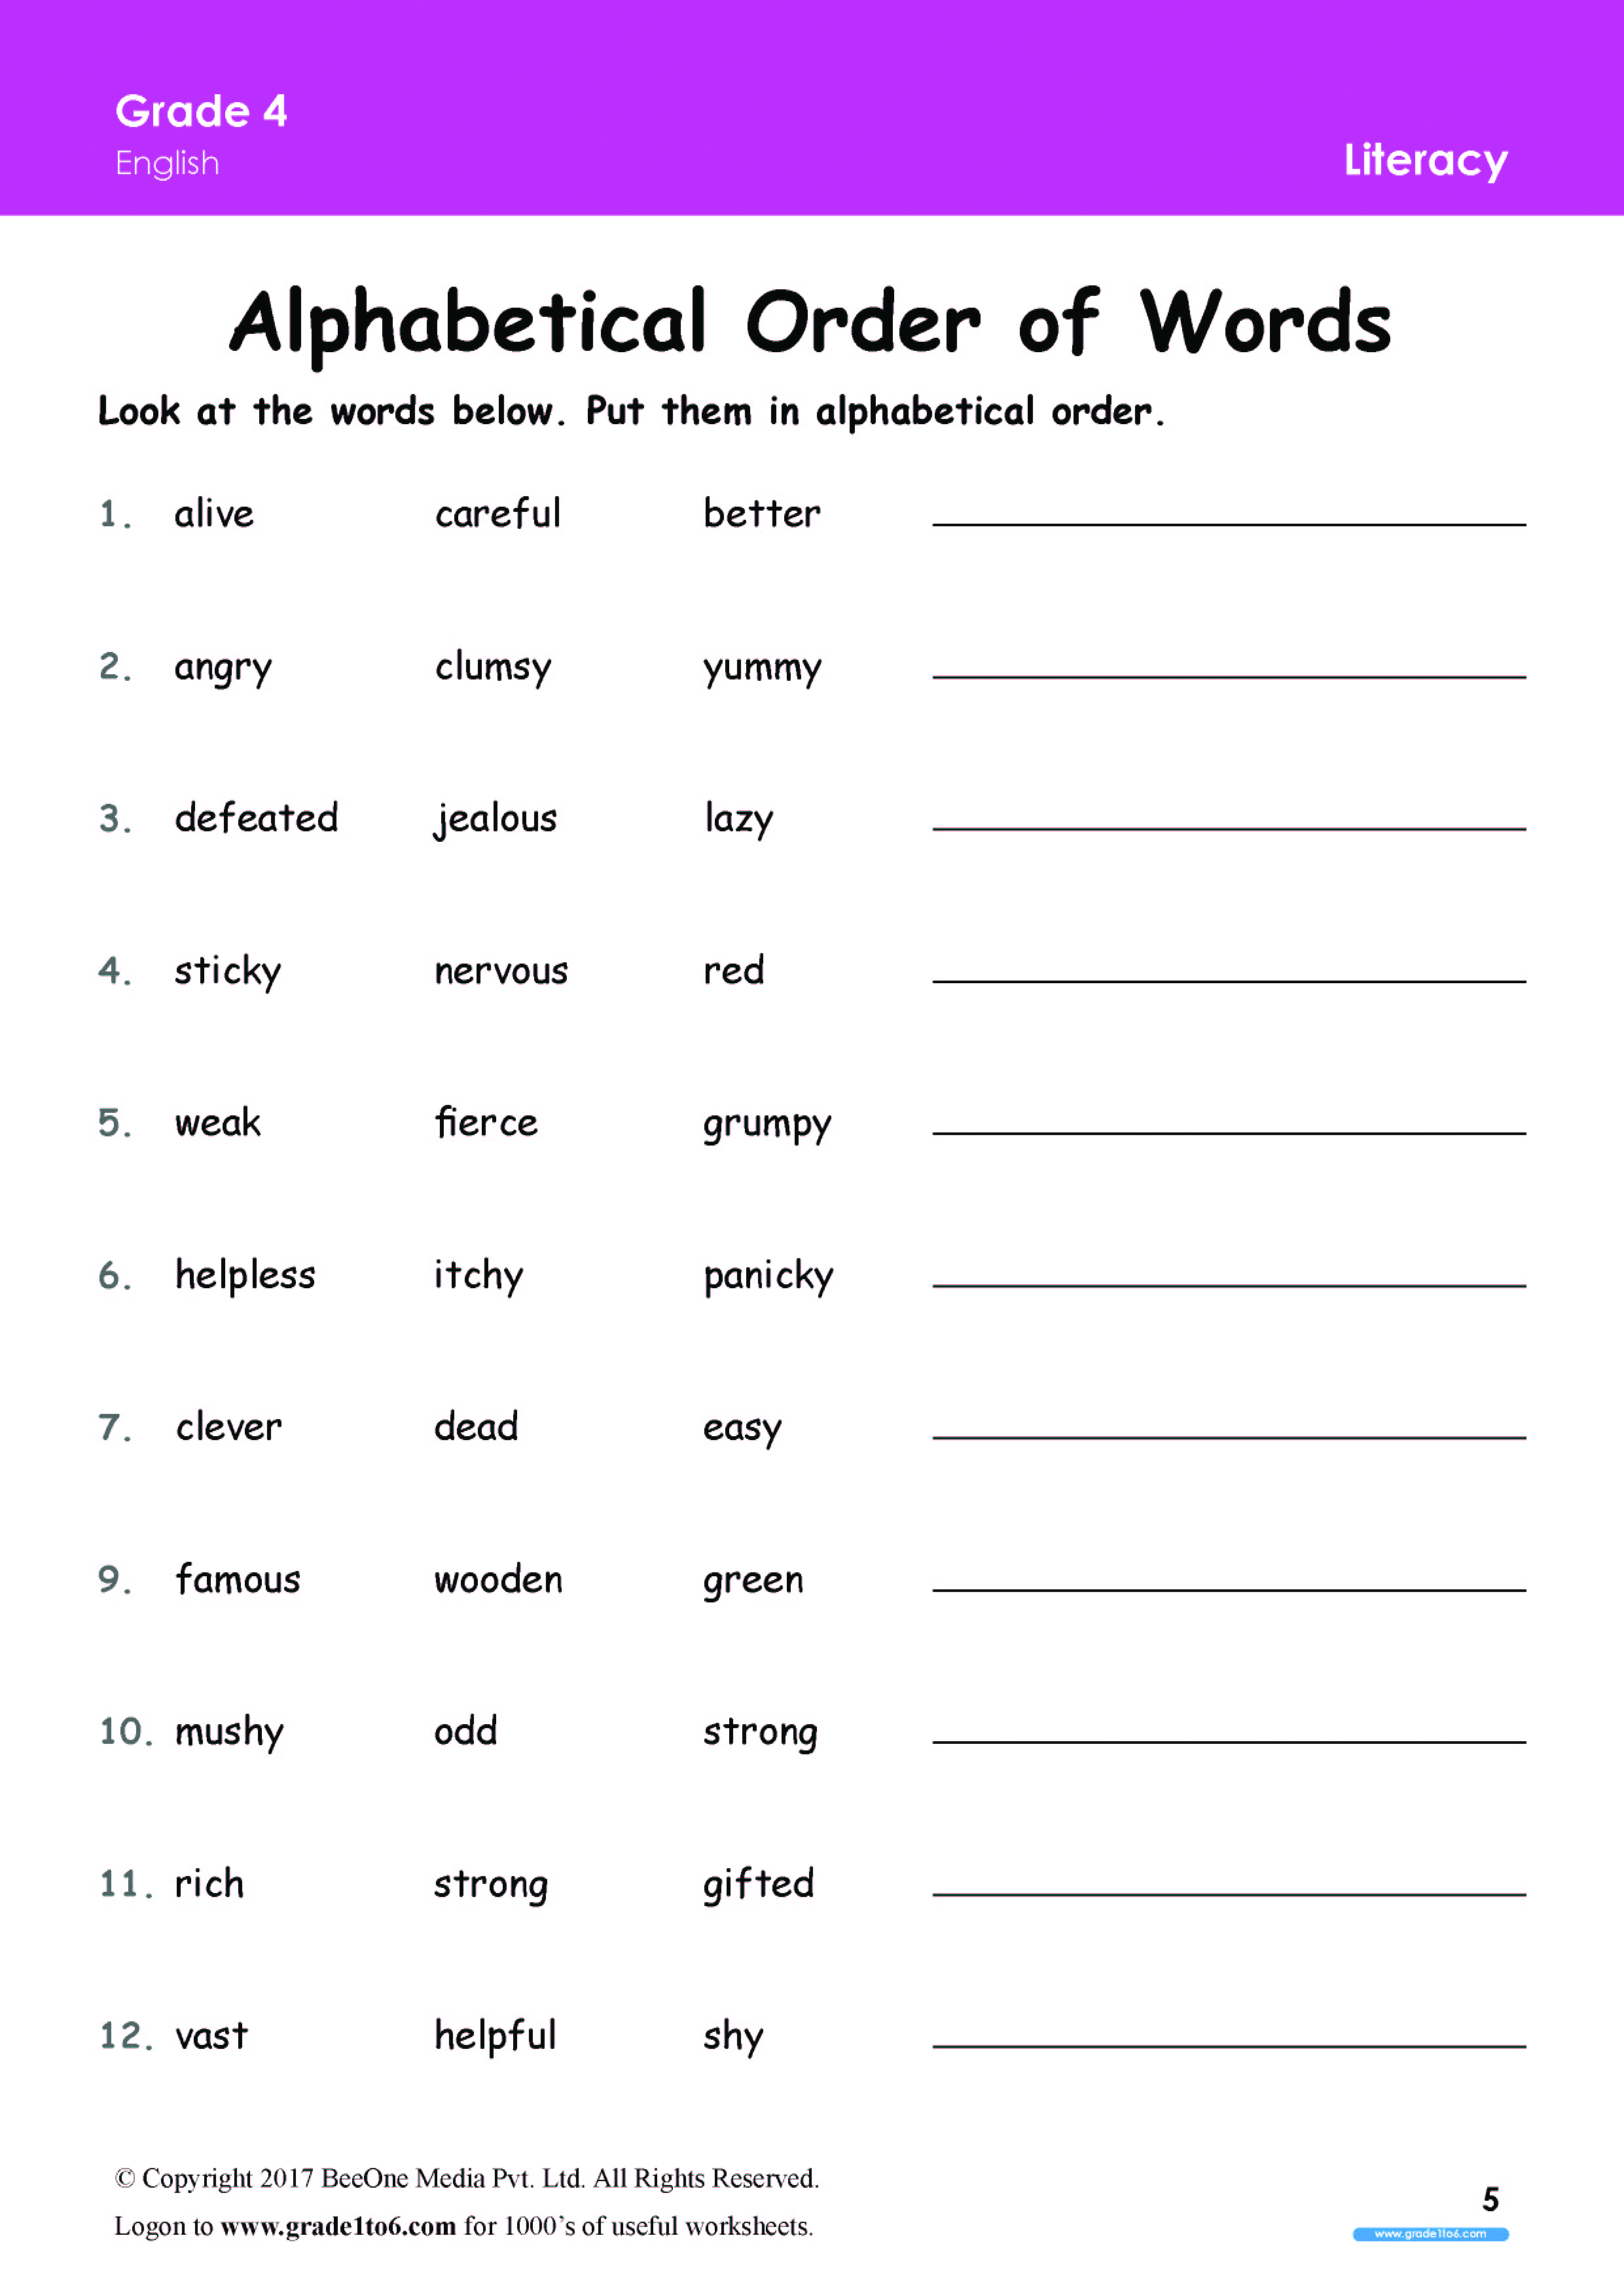 Alphabetical Order worksheets Grade 4|www.grade1to6.com